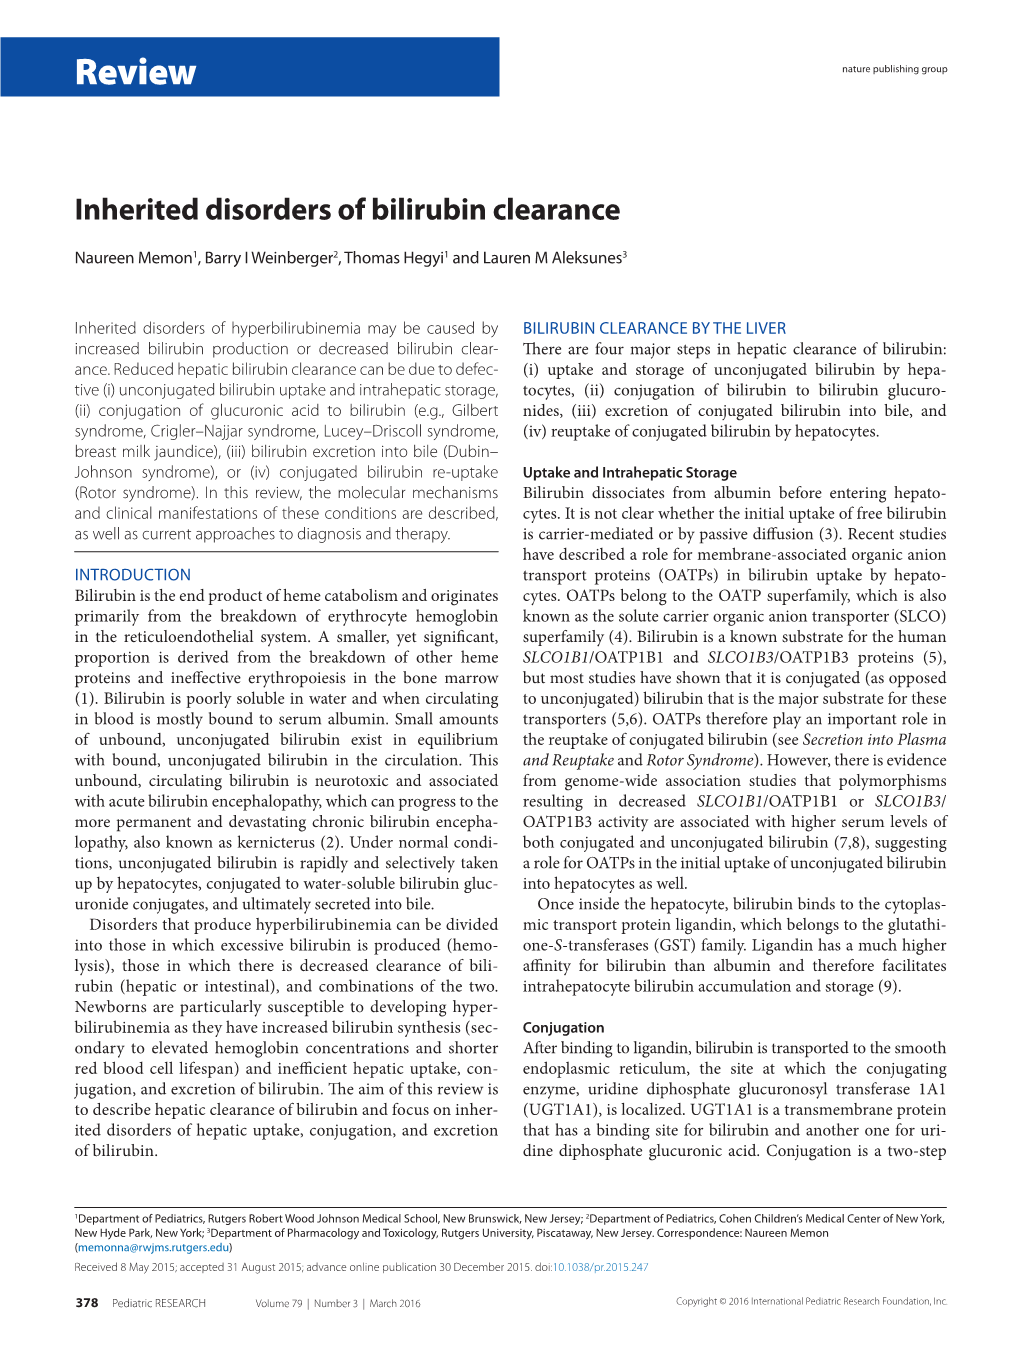 Inherited Disorders of Bilirubin Clearance